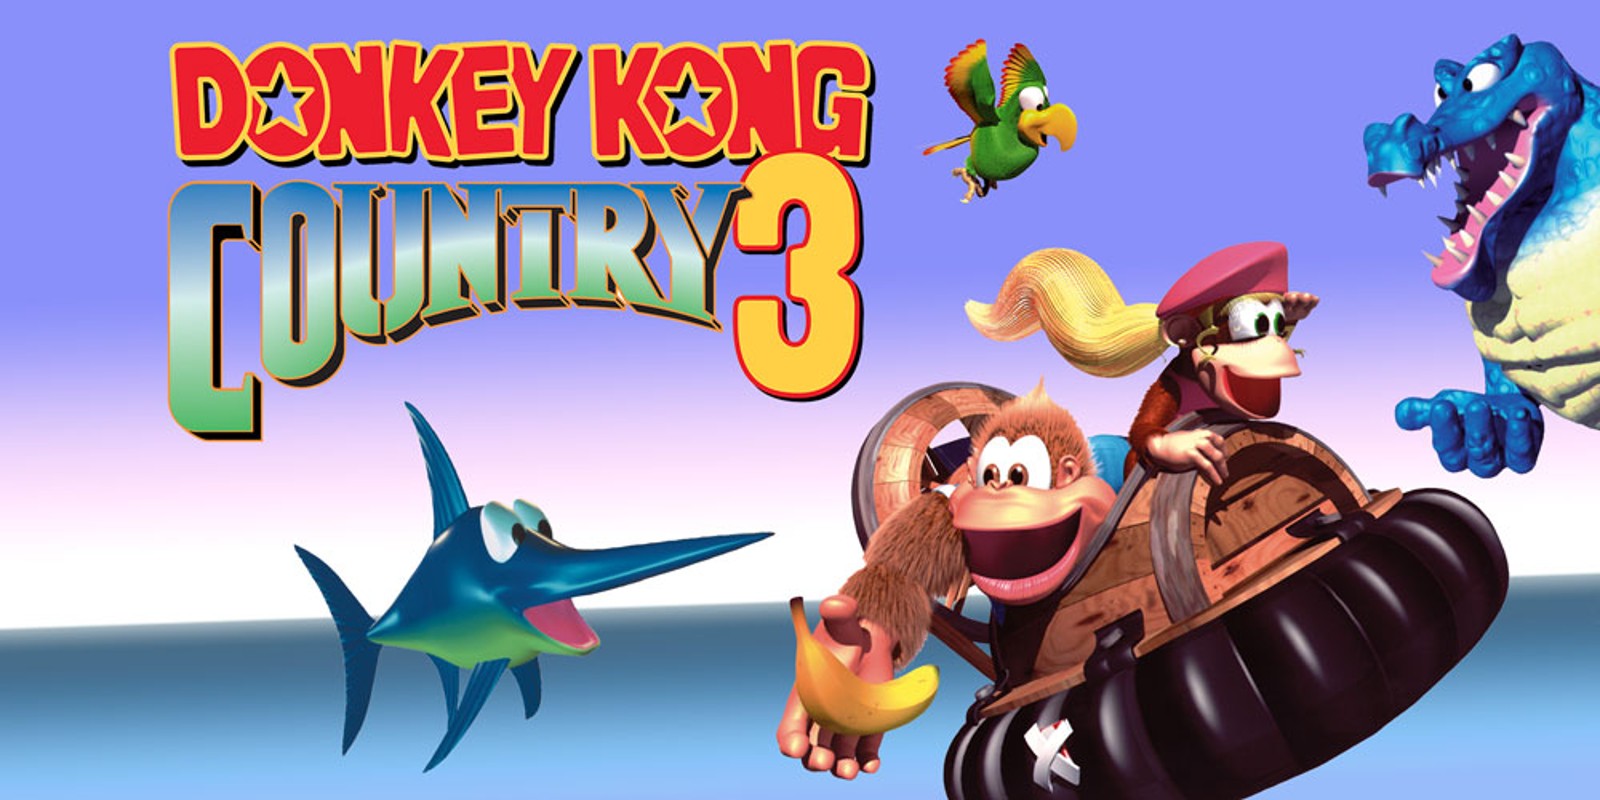 super donkey kong 3